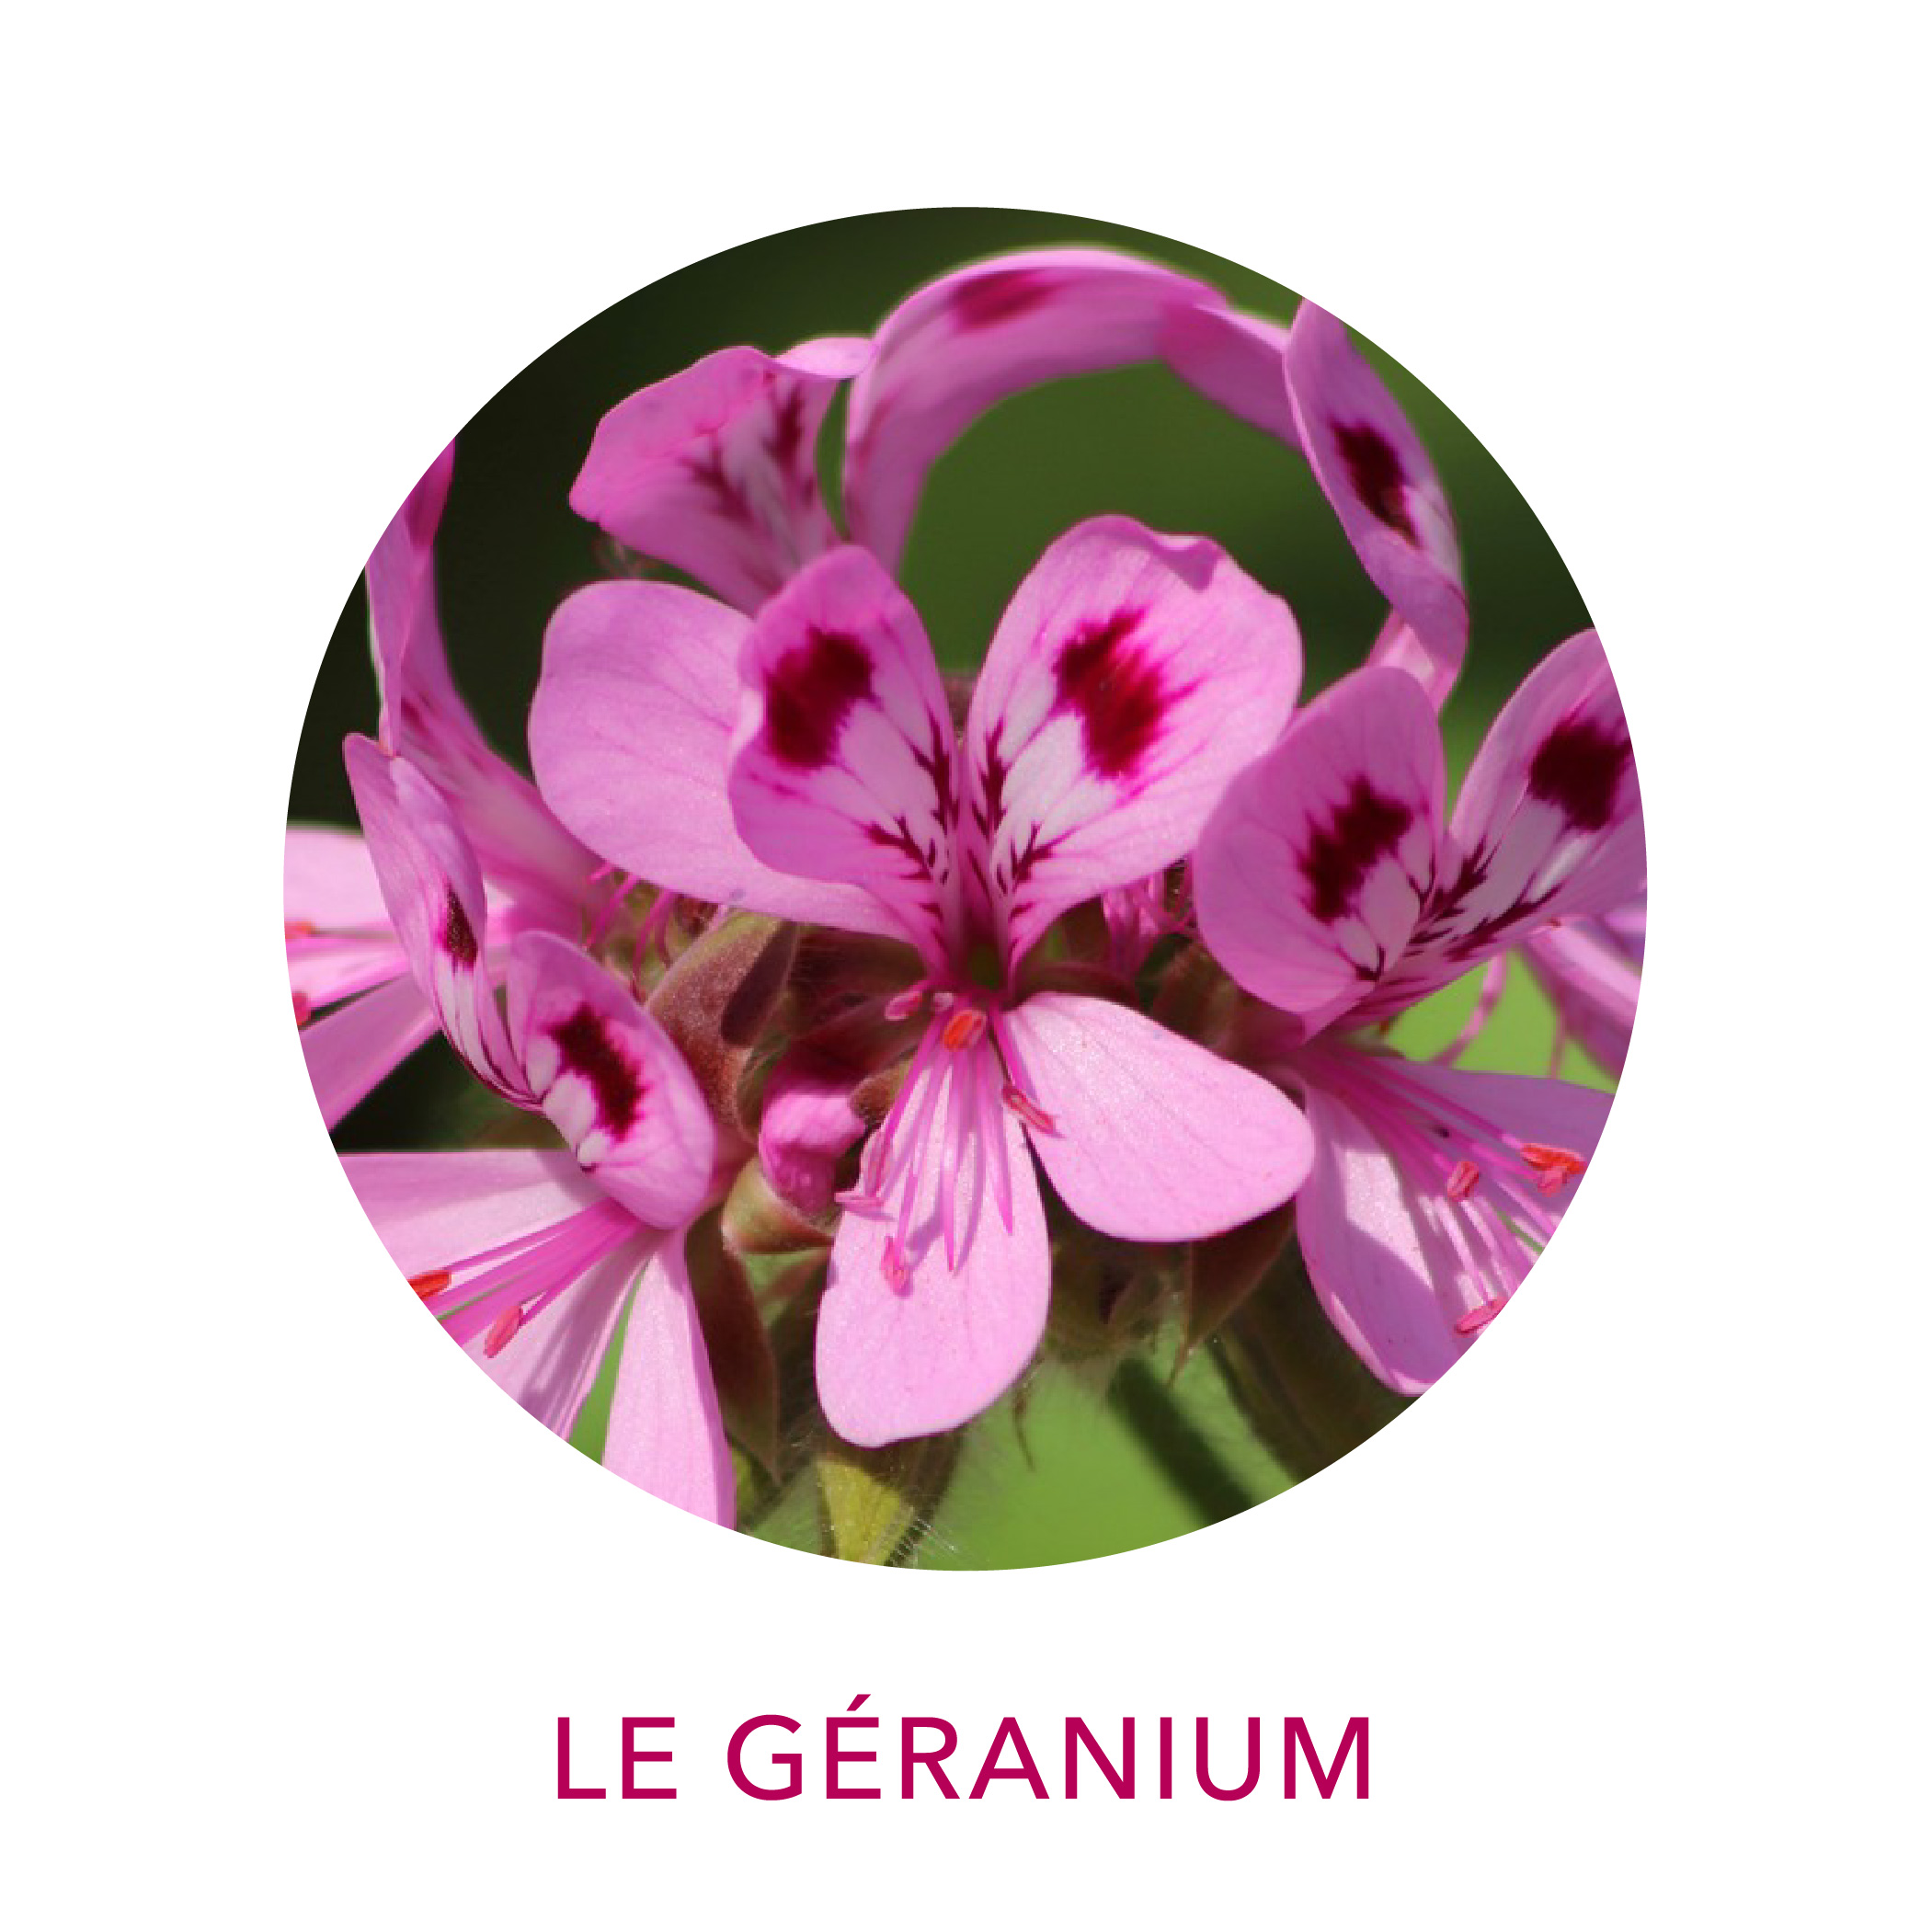 Actif huile essentielle bio de Géranium